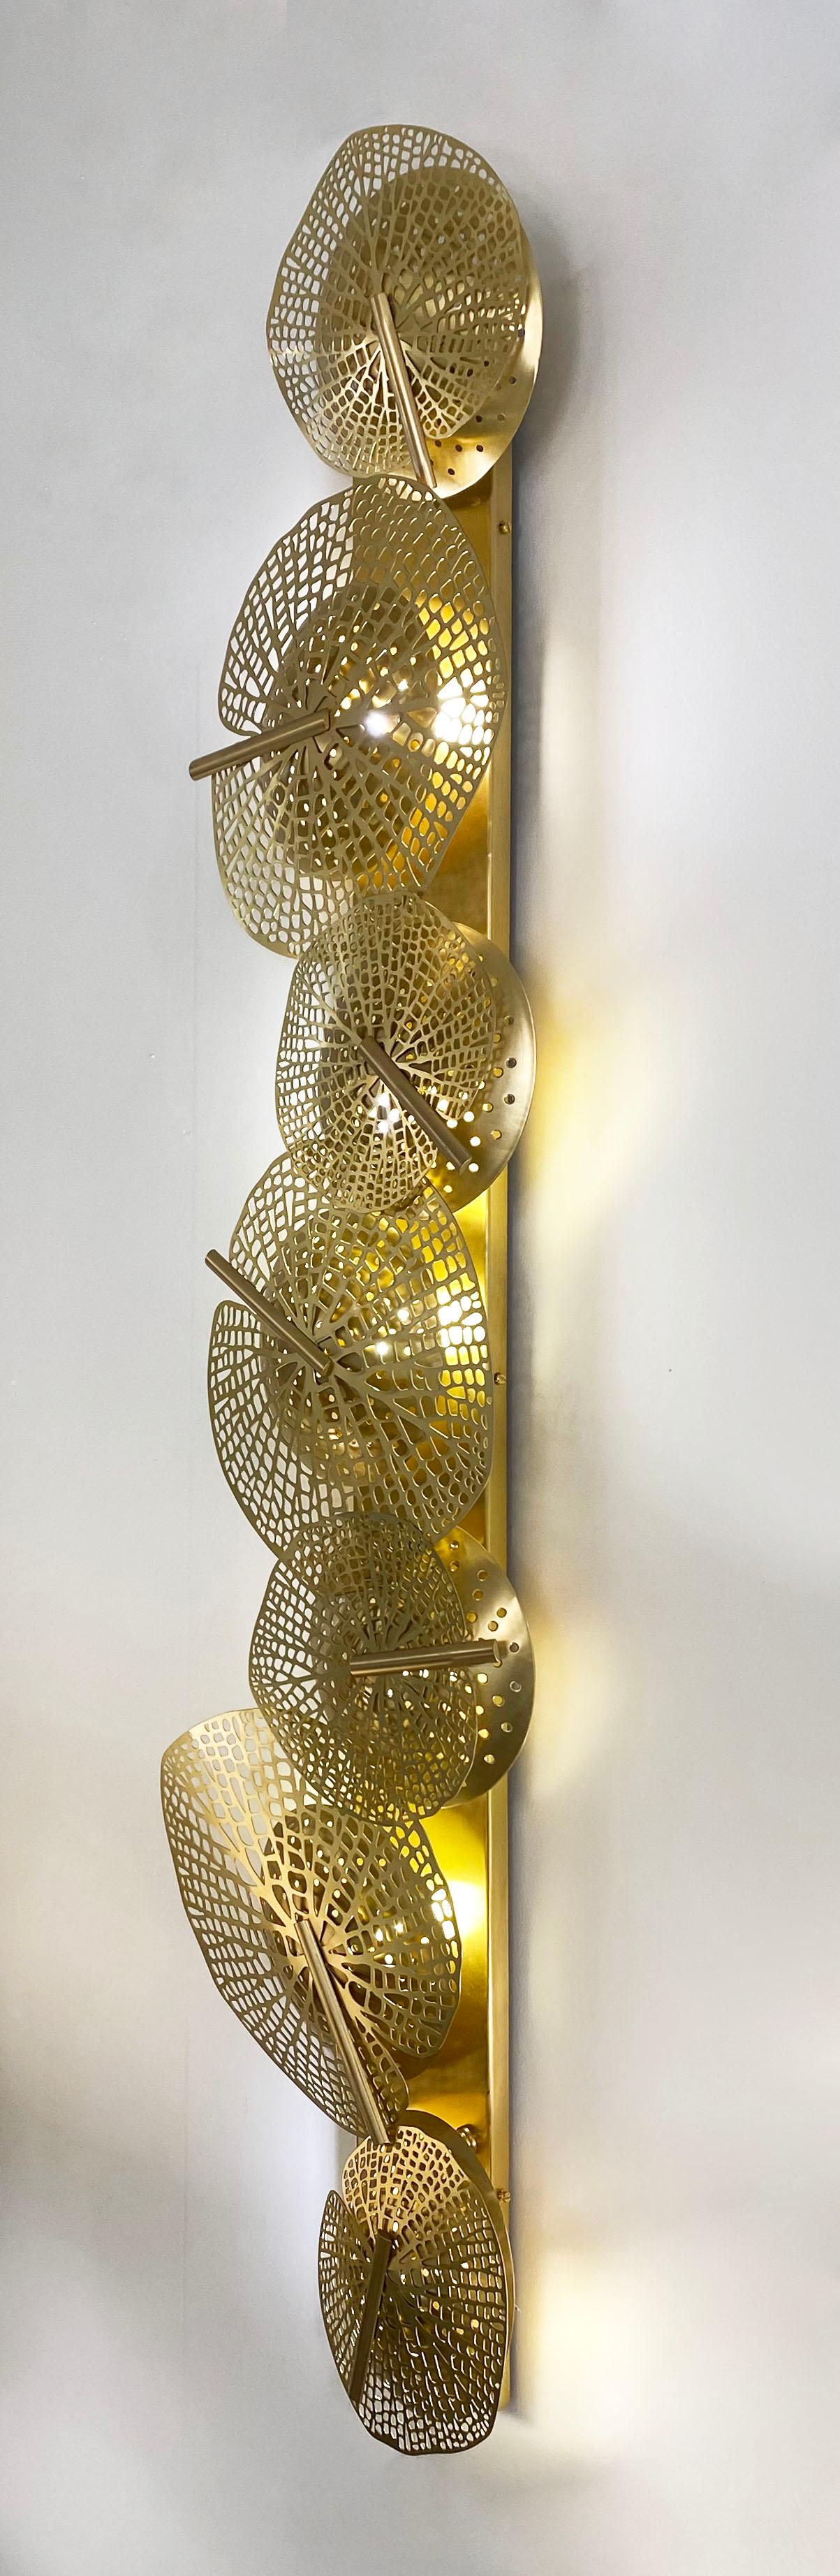 Organic Modern Monumental Italian Organic Art Design Modern Perforated Brass Leaf Sconce For Sale